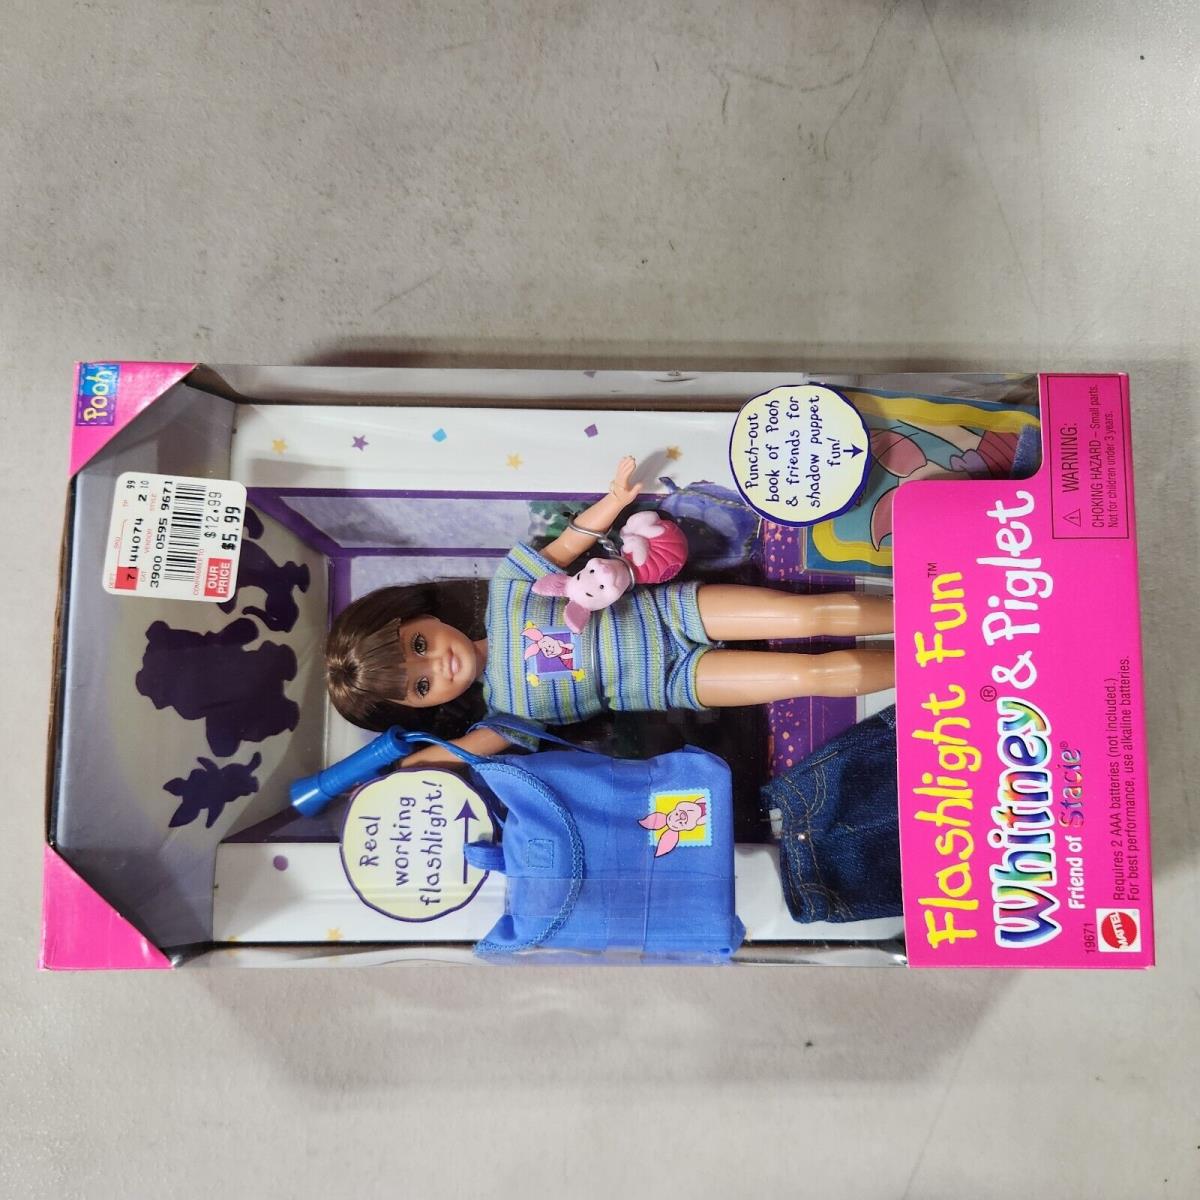 Barbie 1997 Flashlight Fun Whitney Doll Piglet by Mattel 19671 C8 2